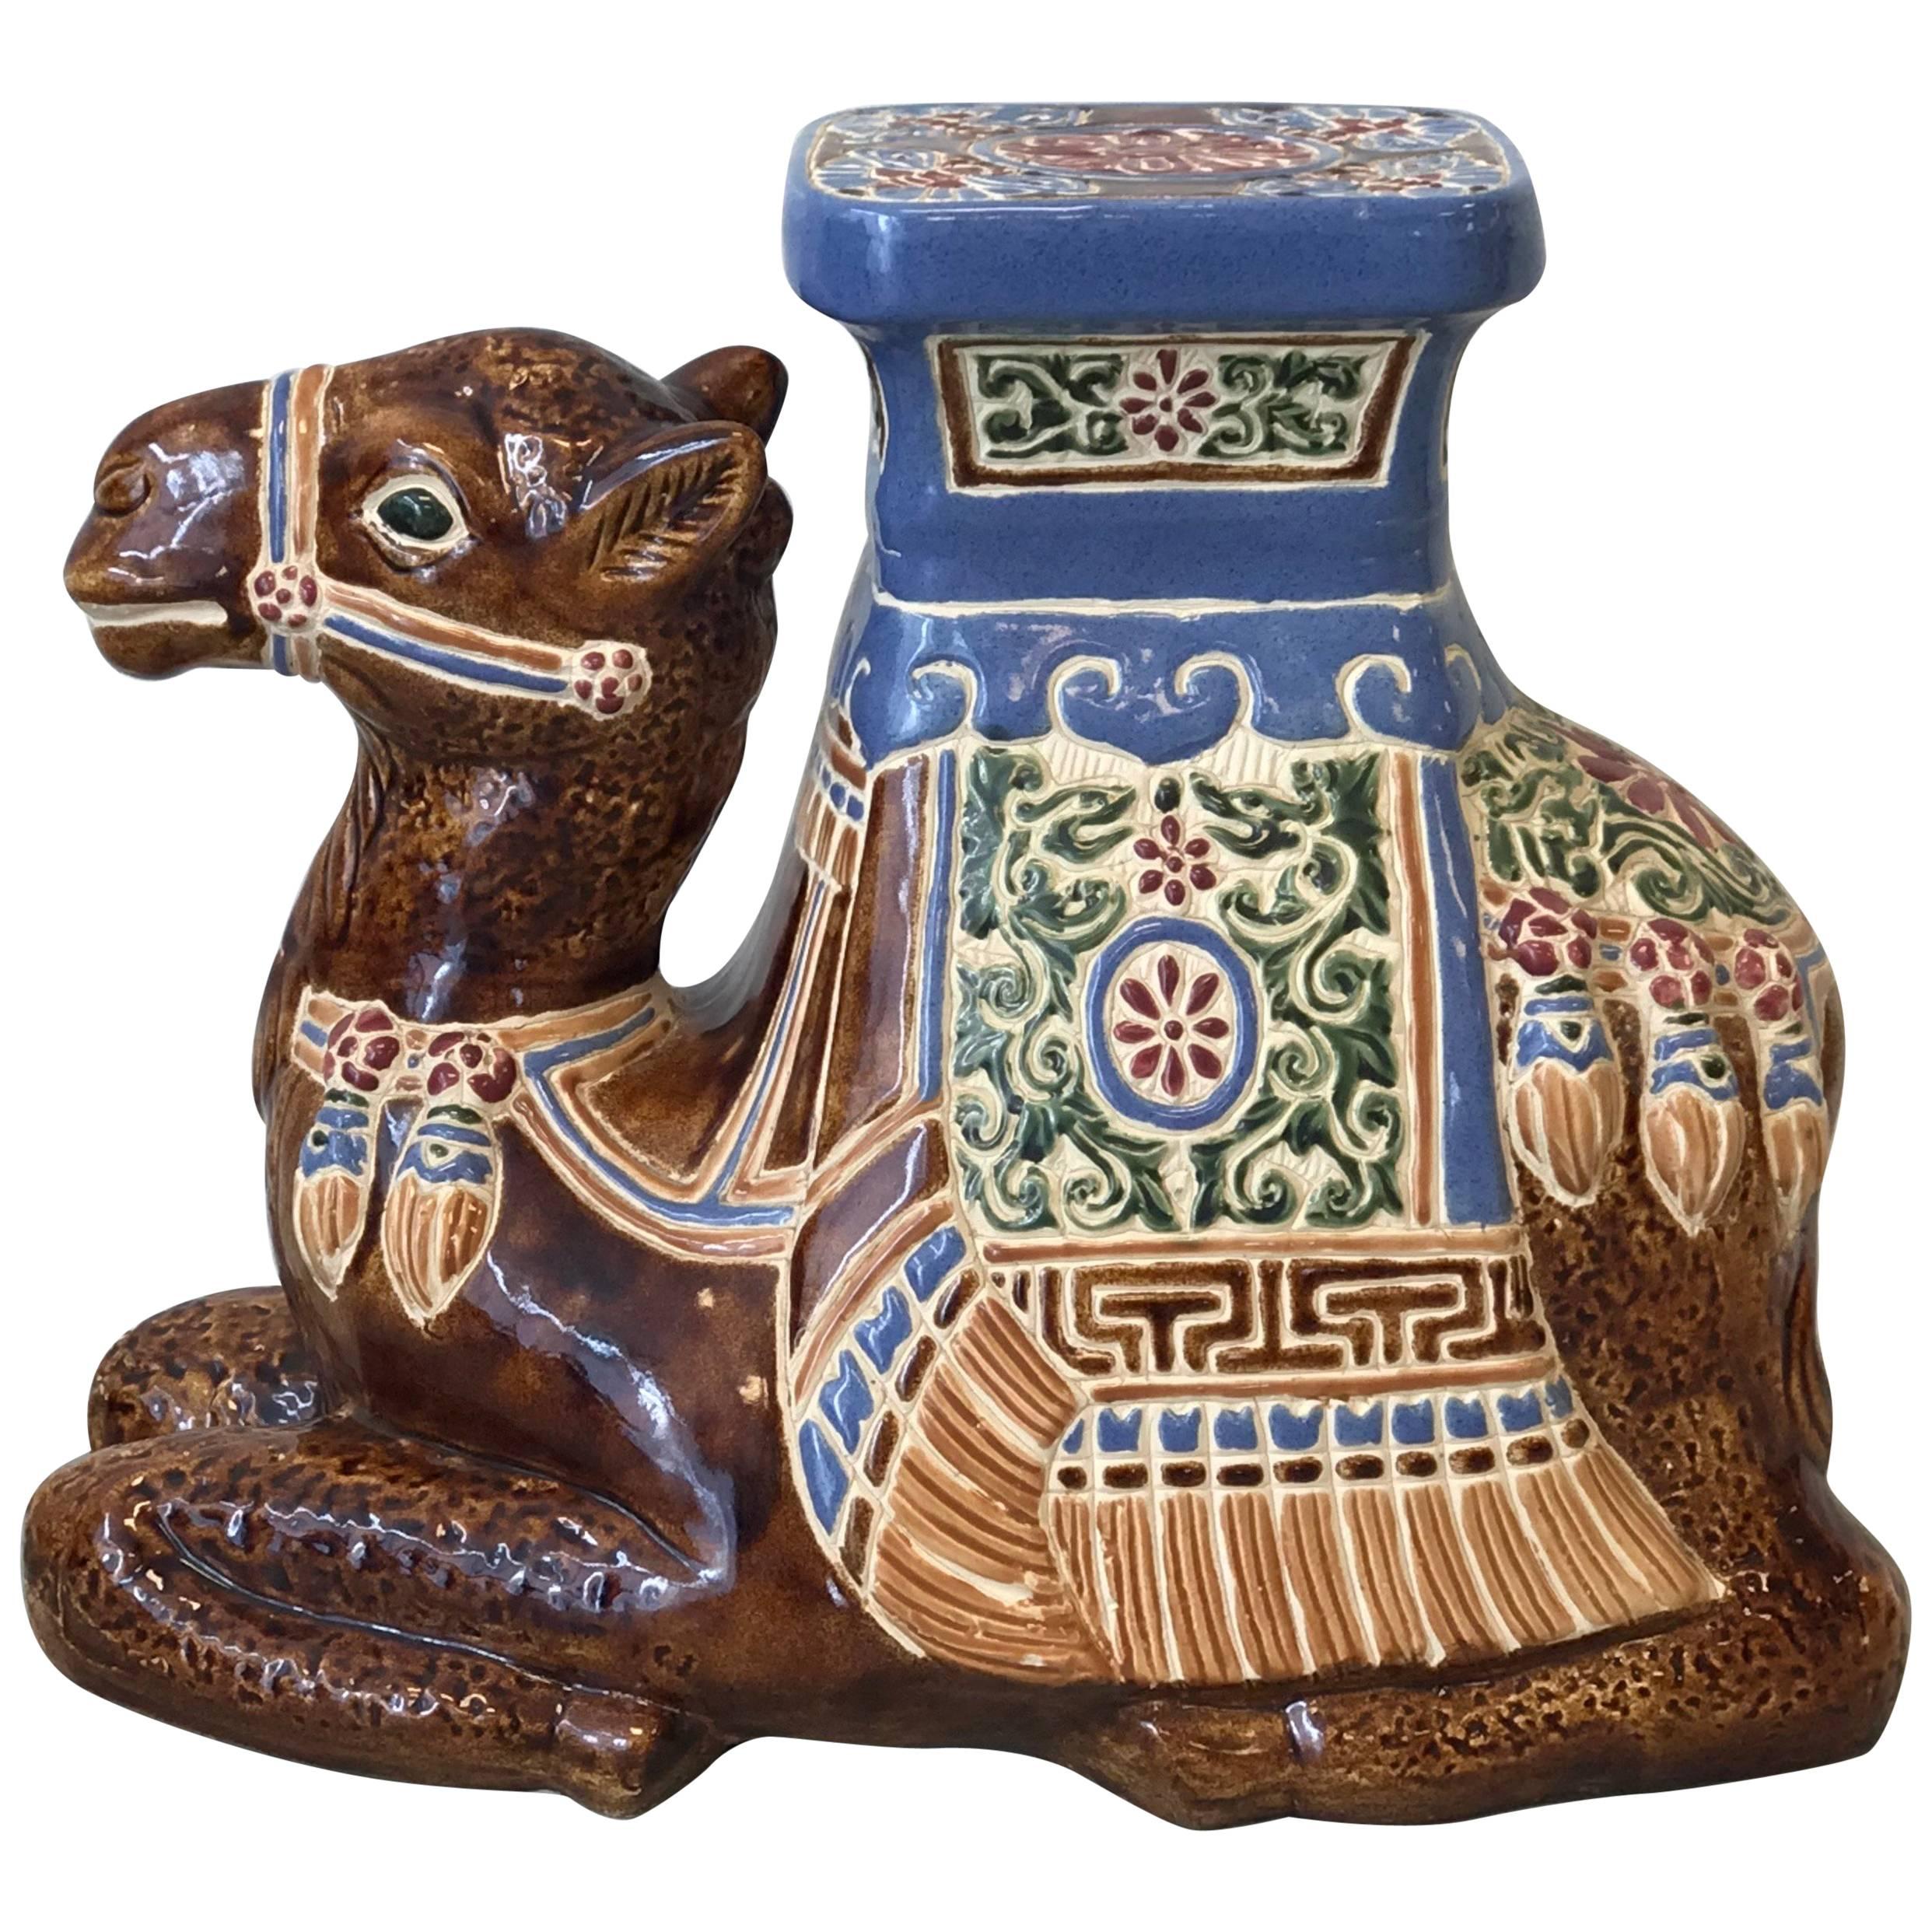 1970s Ceramic Camel Sculpture Garden Stool